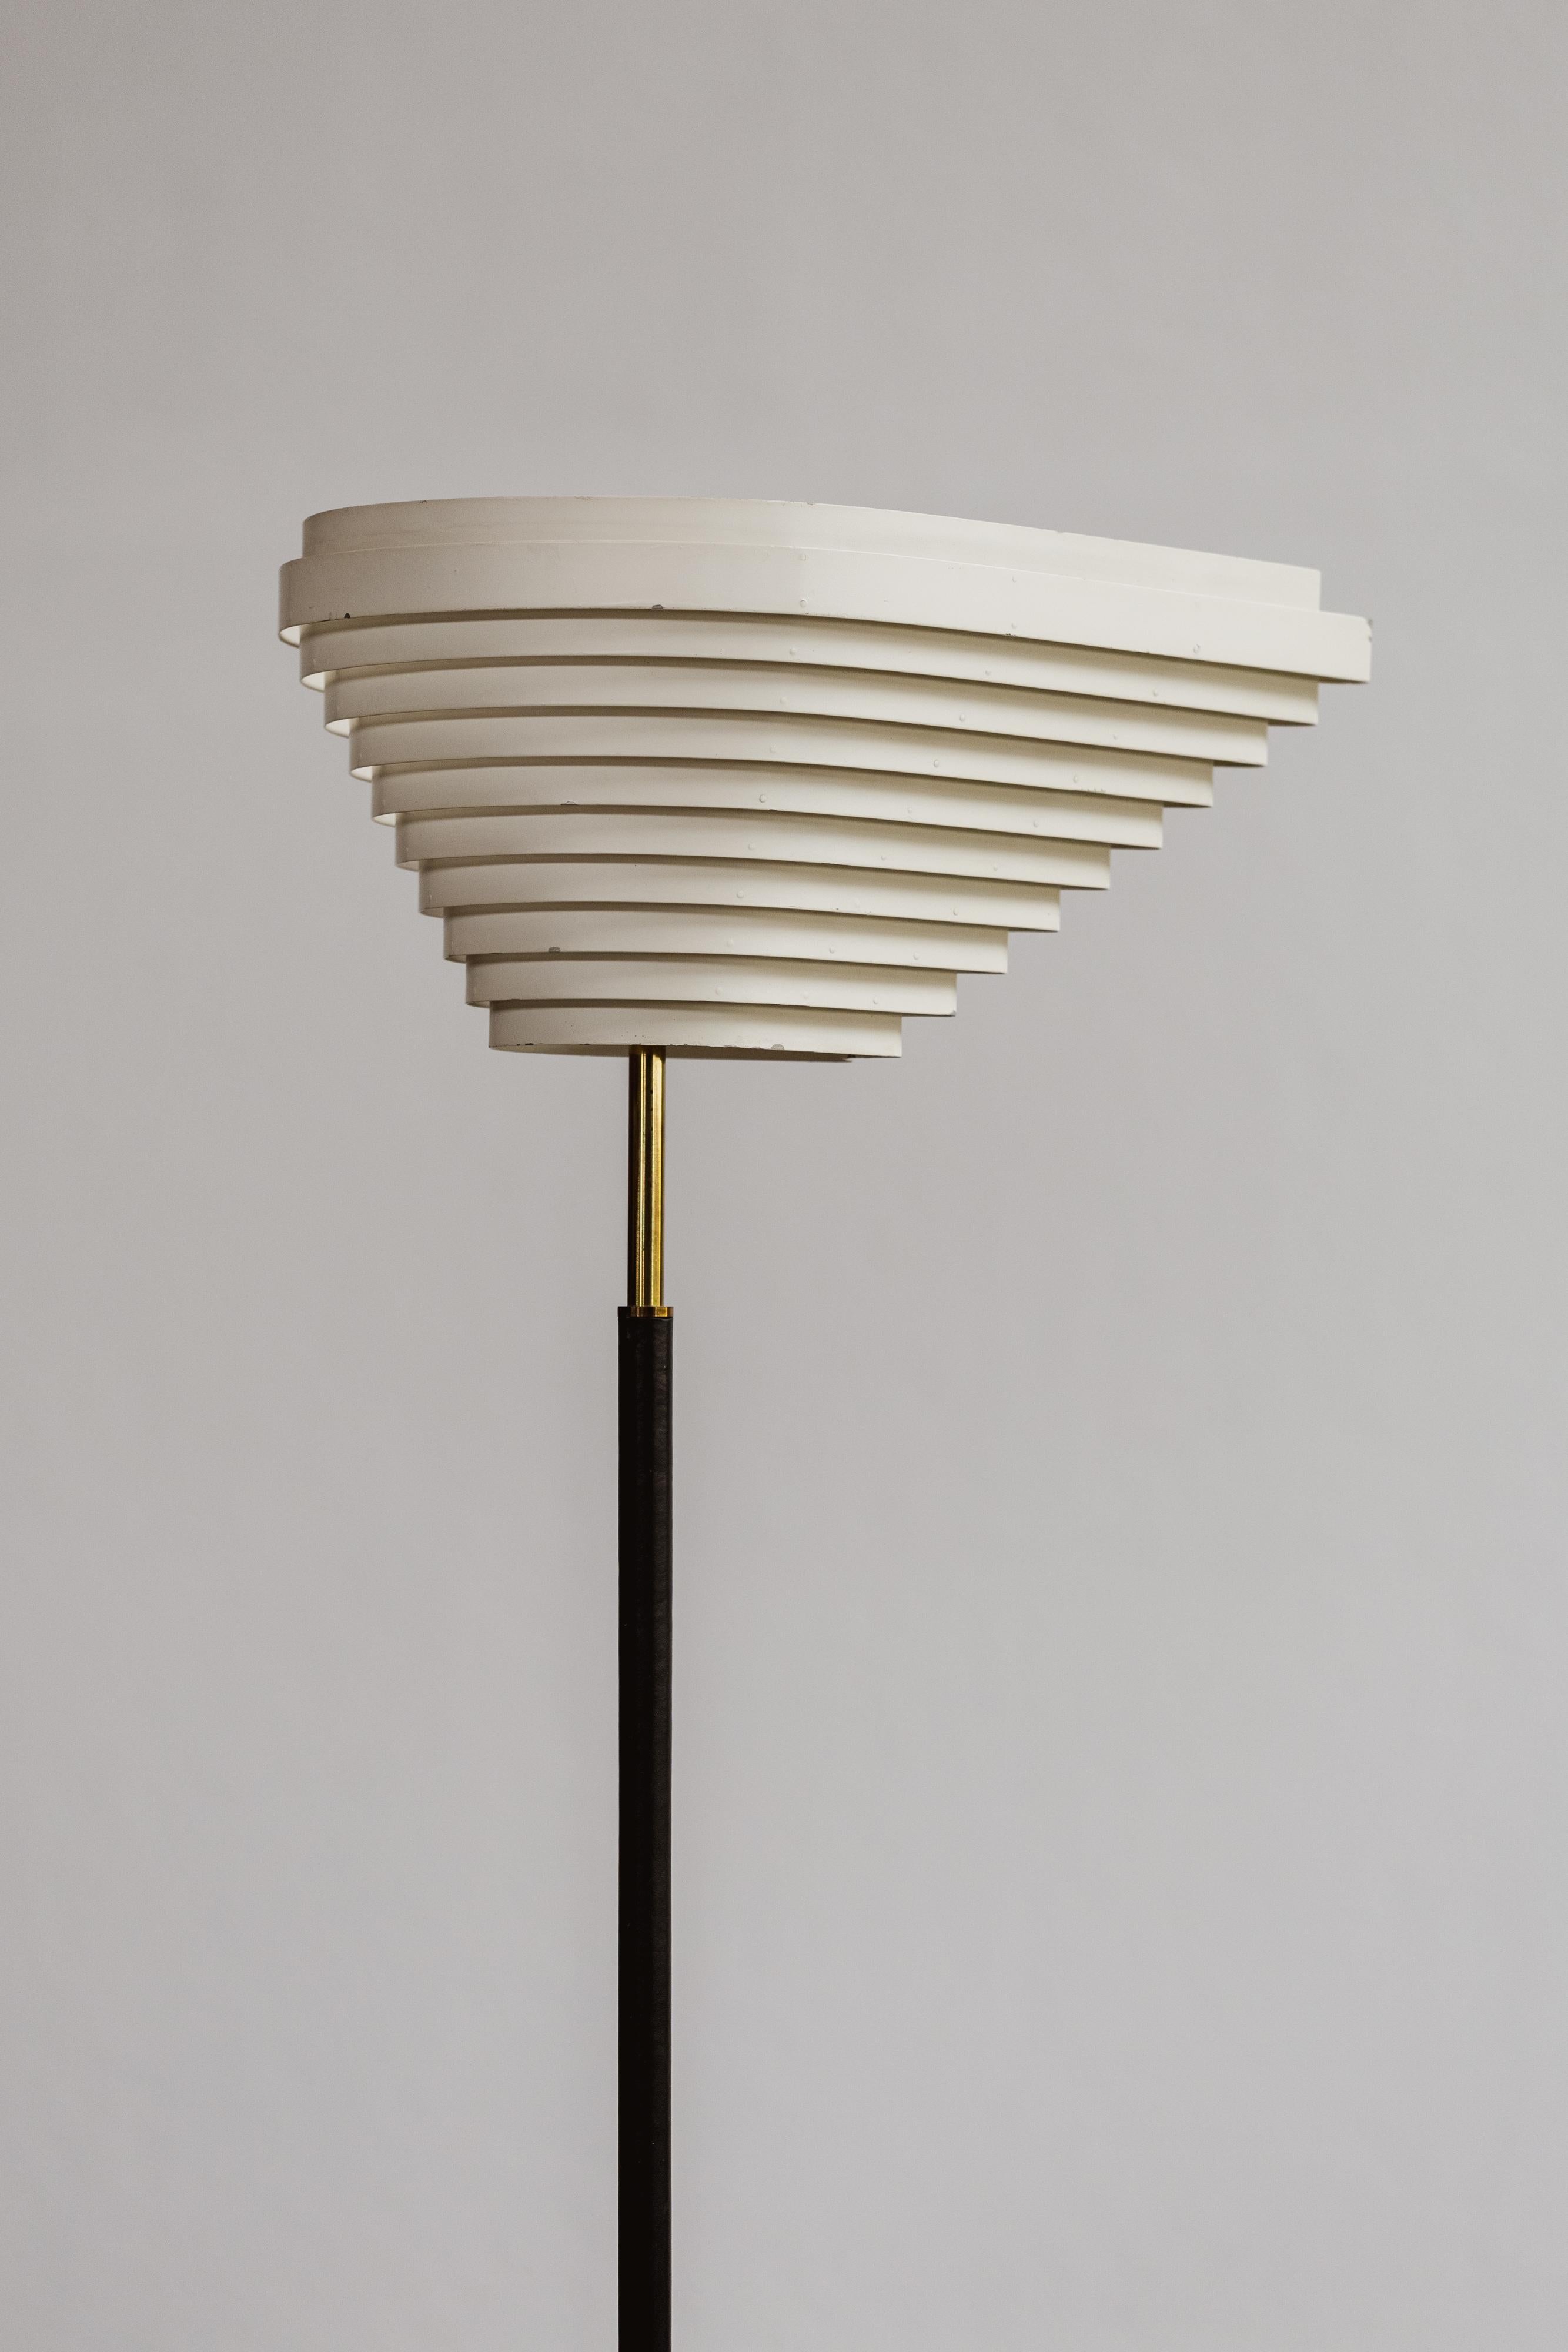 Alvar Aalto A805 “Angel Wing” Floor Lamp for Valaistustyö, 1954 For Sale 3